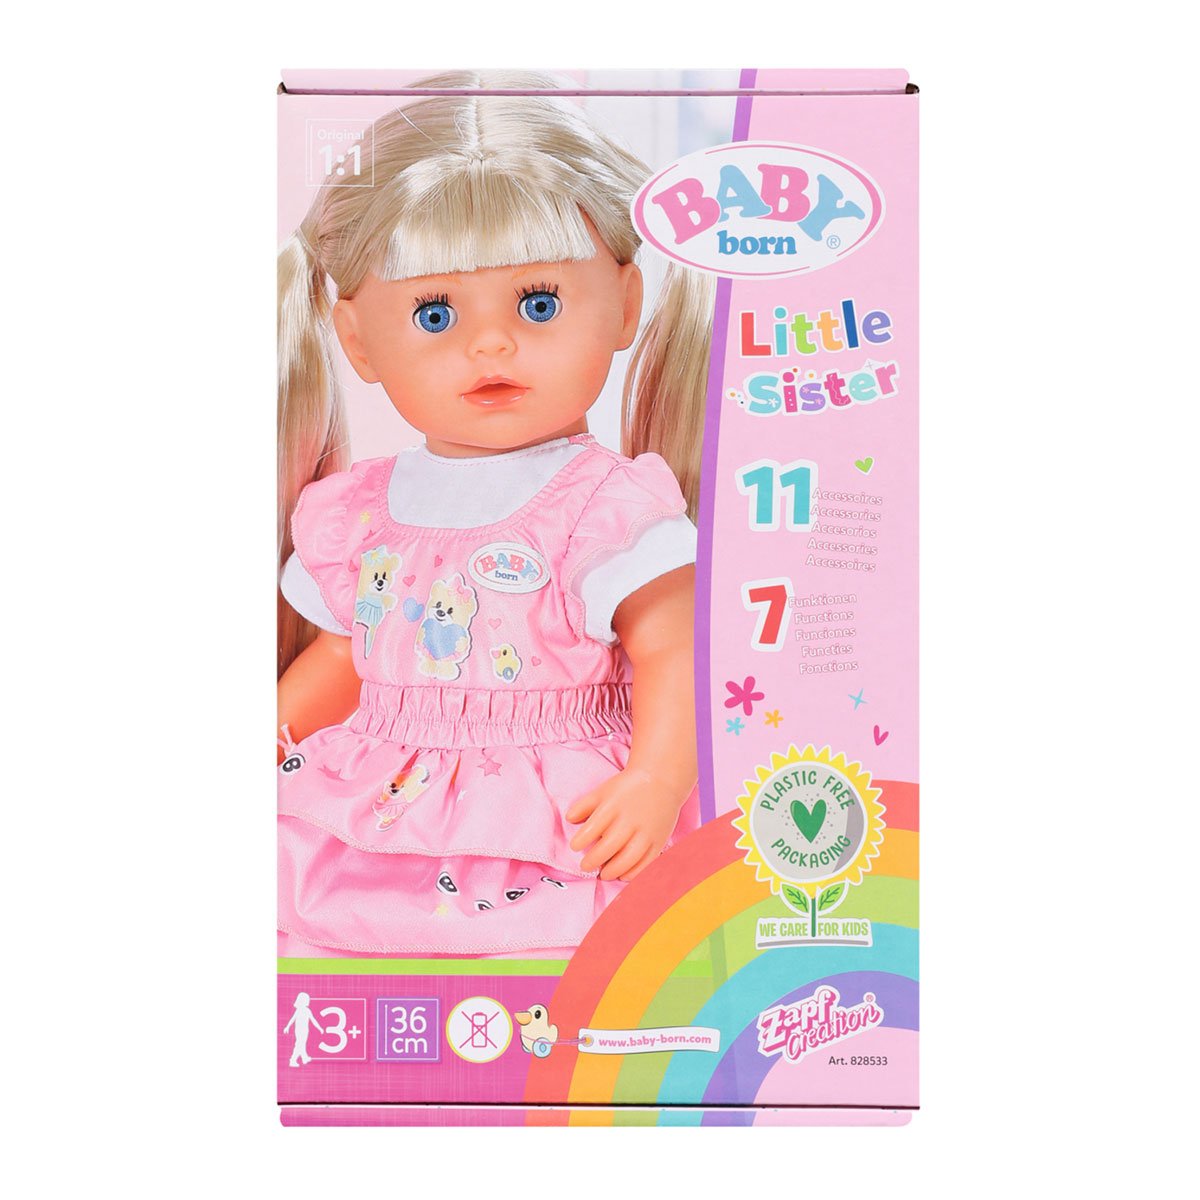 Кукла Baby Born Нежные объятия Младшая сестричка, с аксессуарами, 36 см (828533) - фото 2